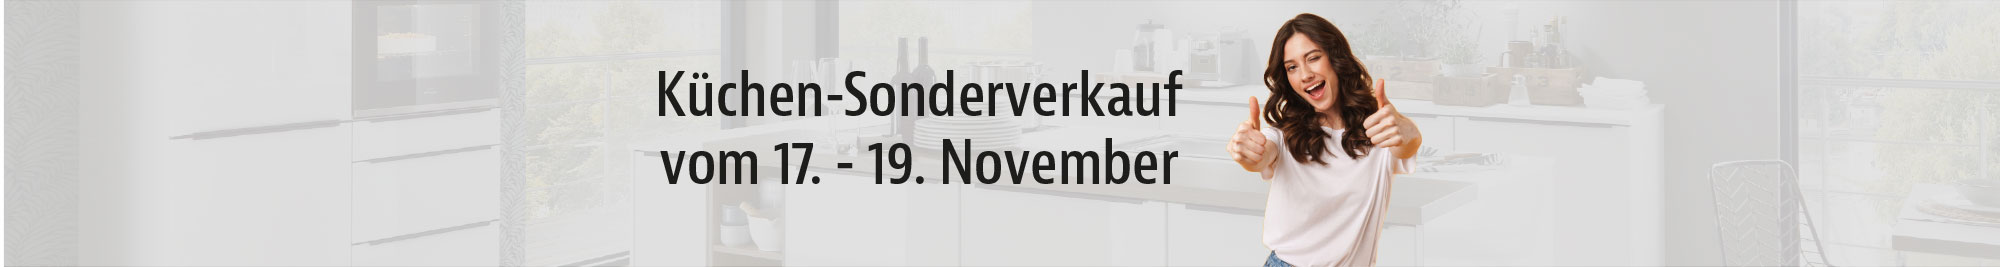 Küchen-Sonderverkauf vom 17.- 19. November